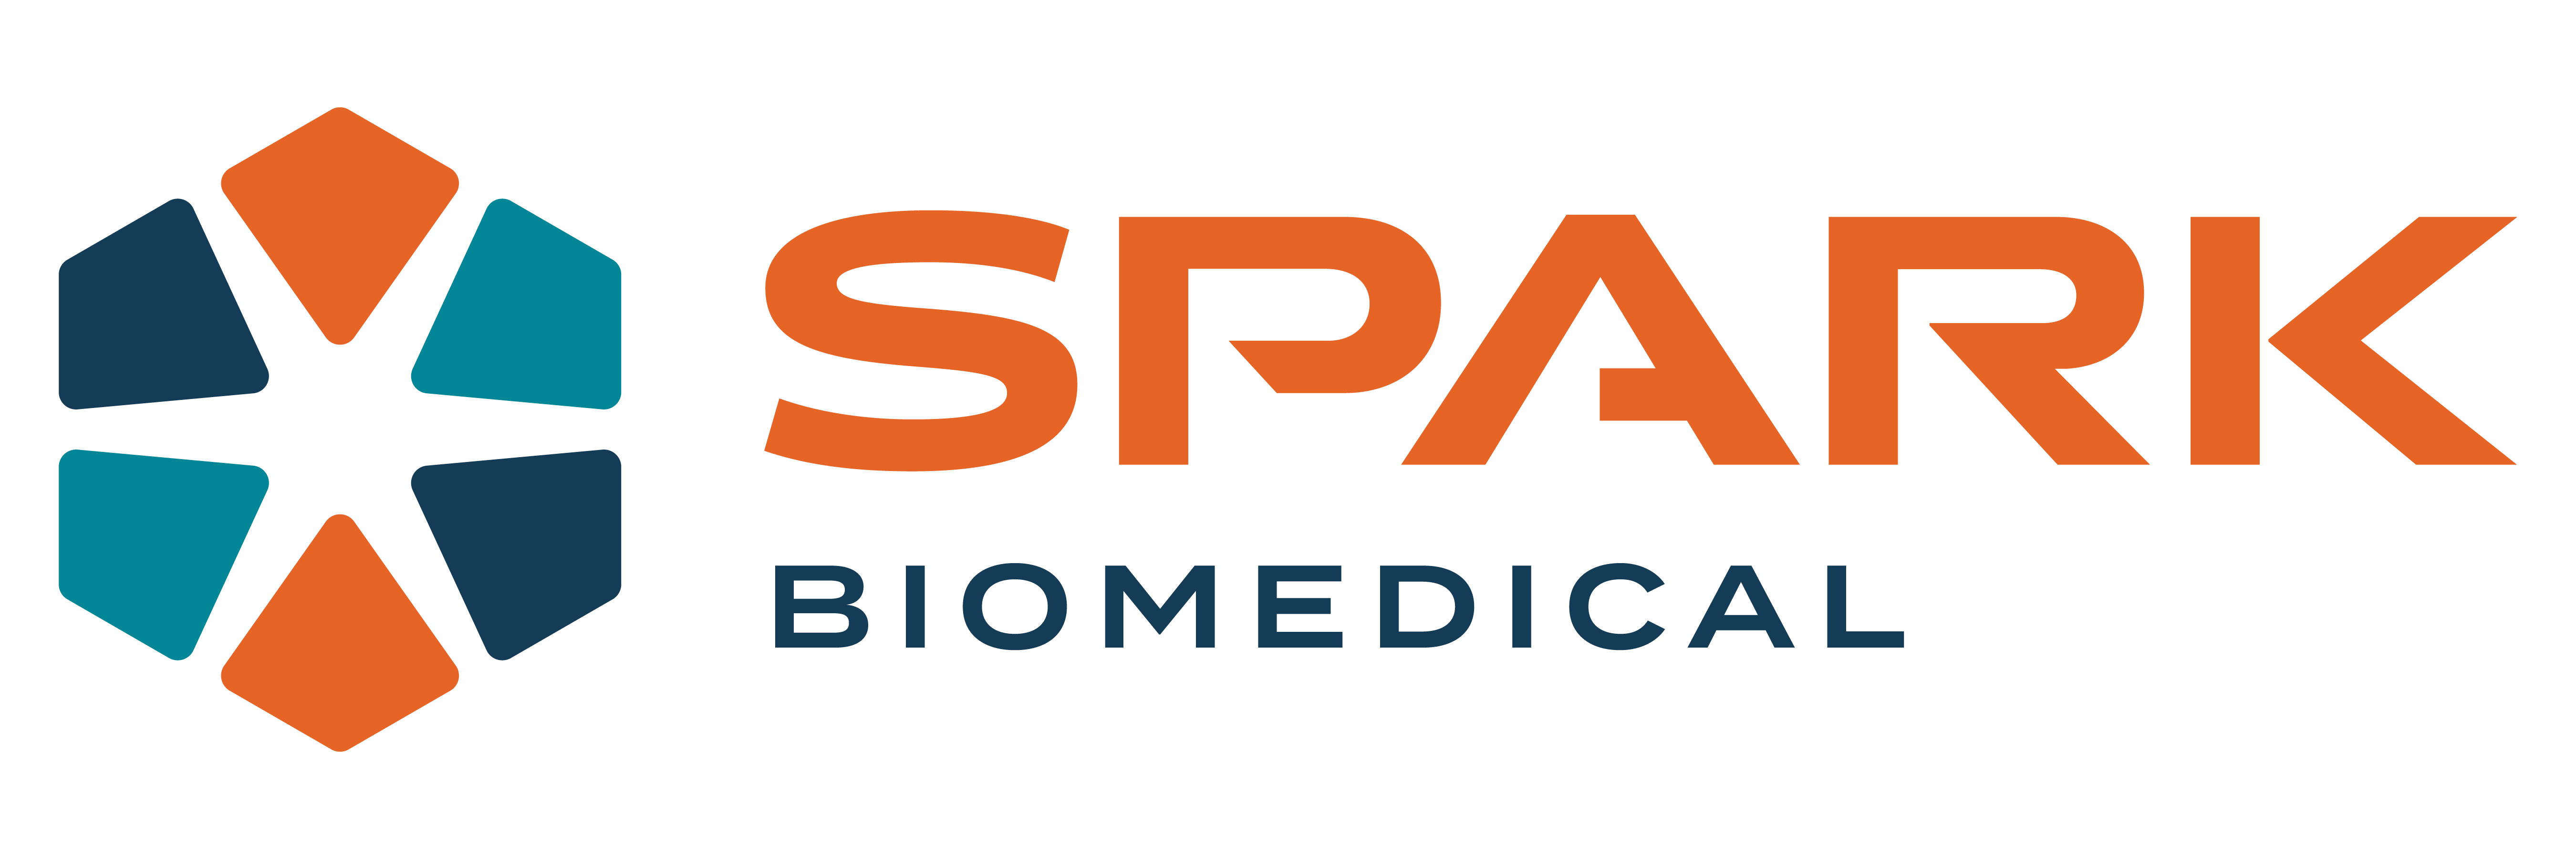 Spark Biomedical logo